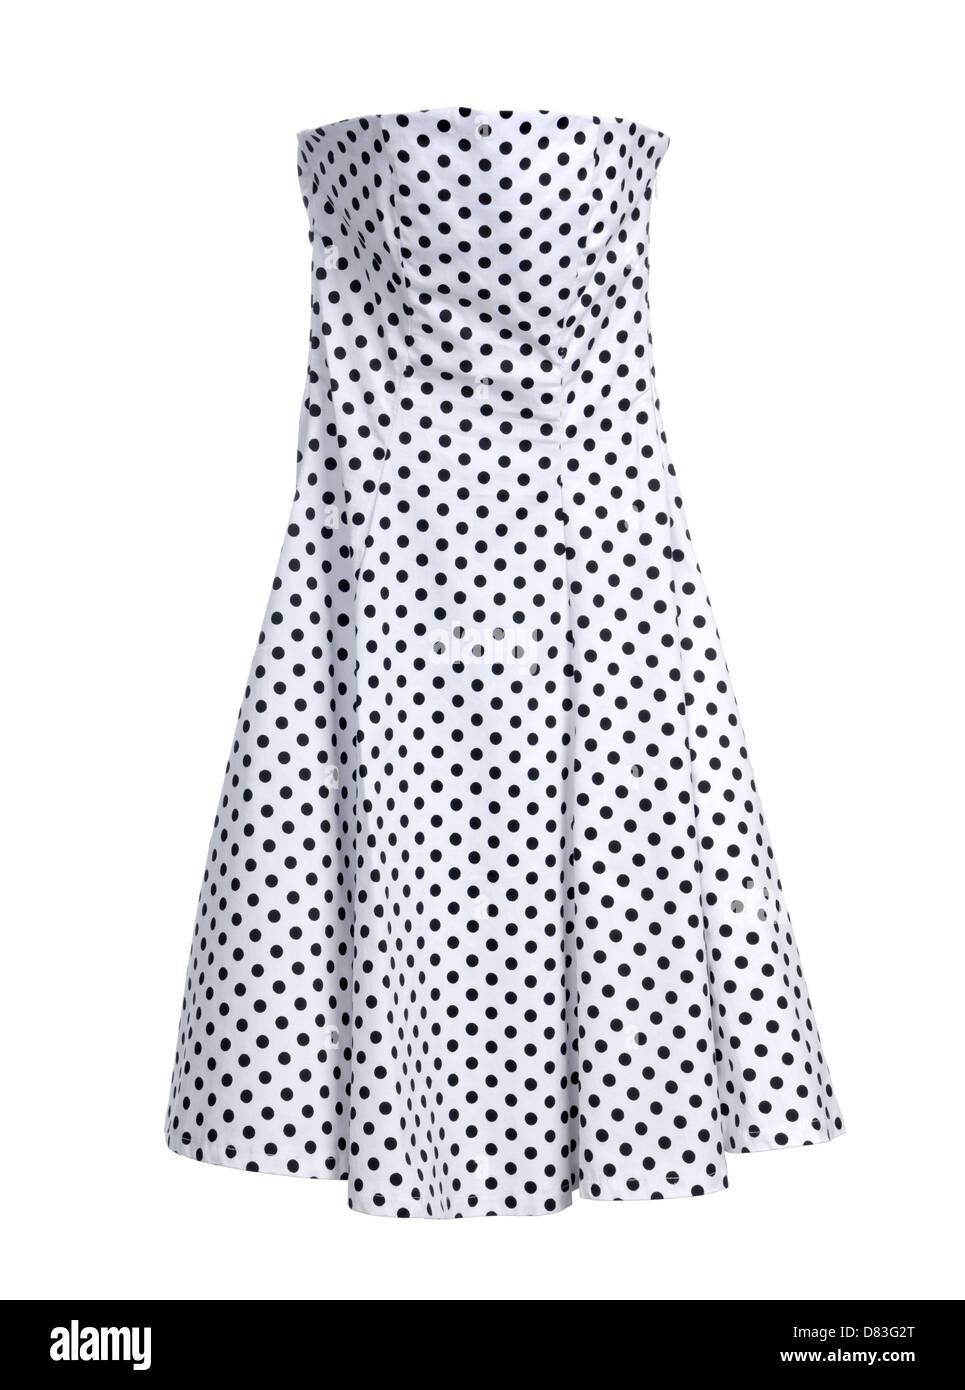 White polka dot dress isolated on white background Stock Photo